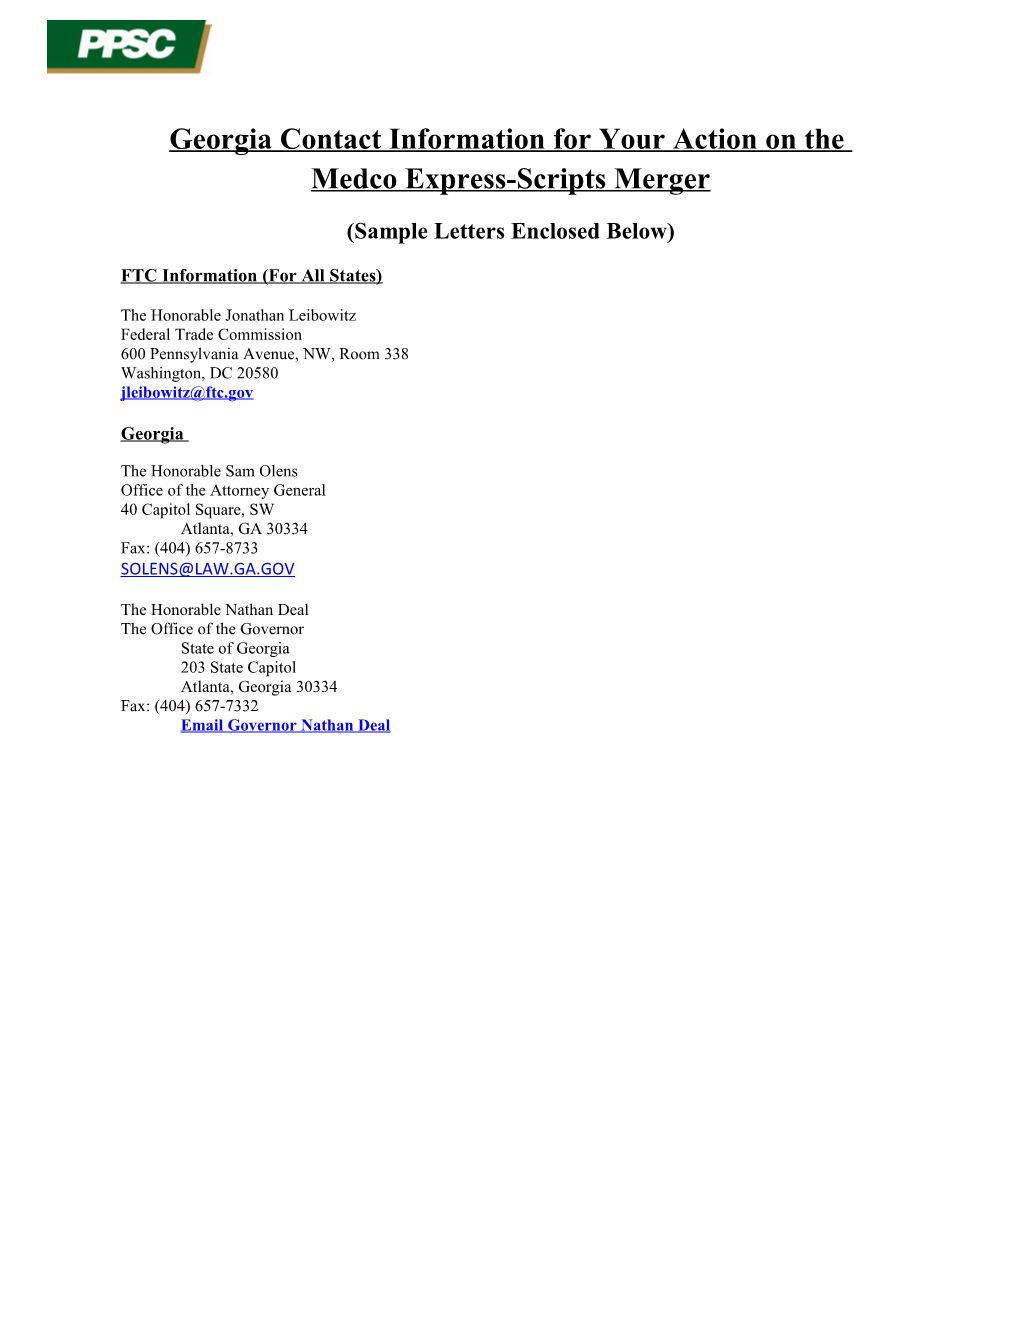 Medco Express-Scripts Merger